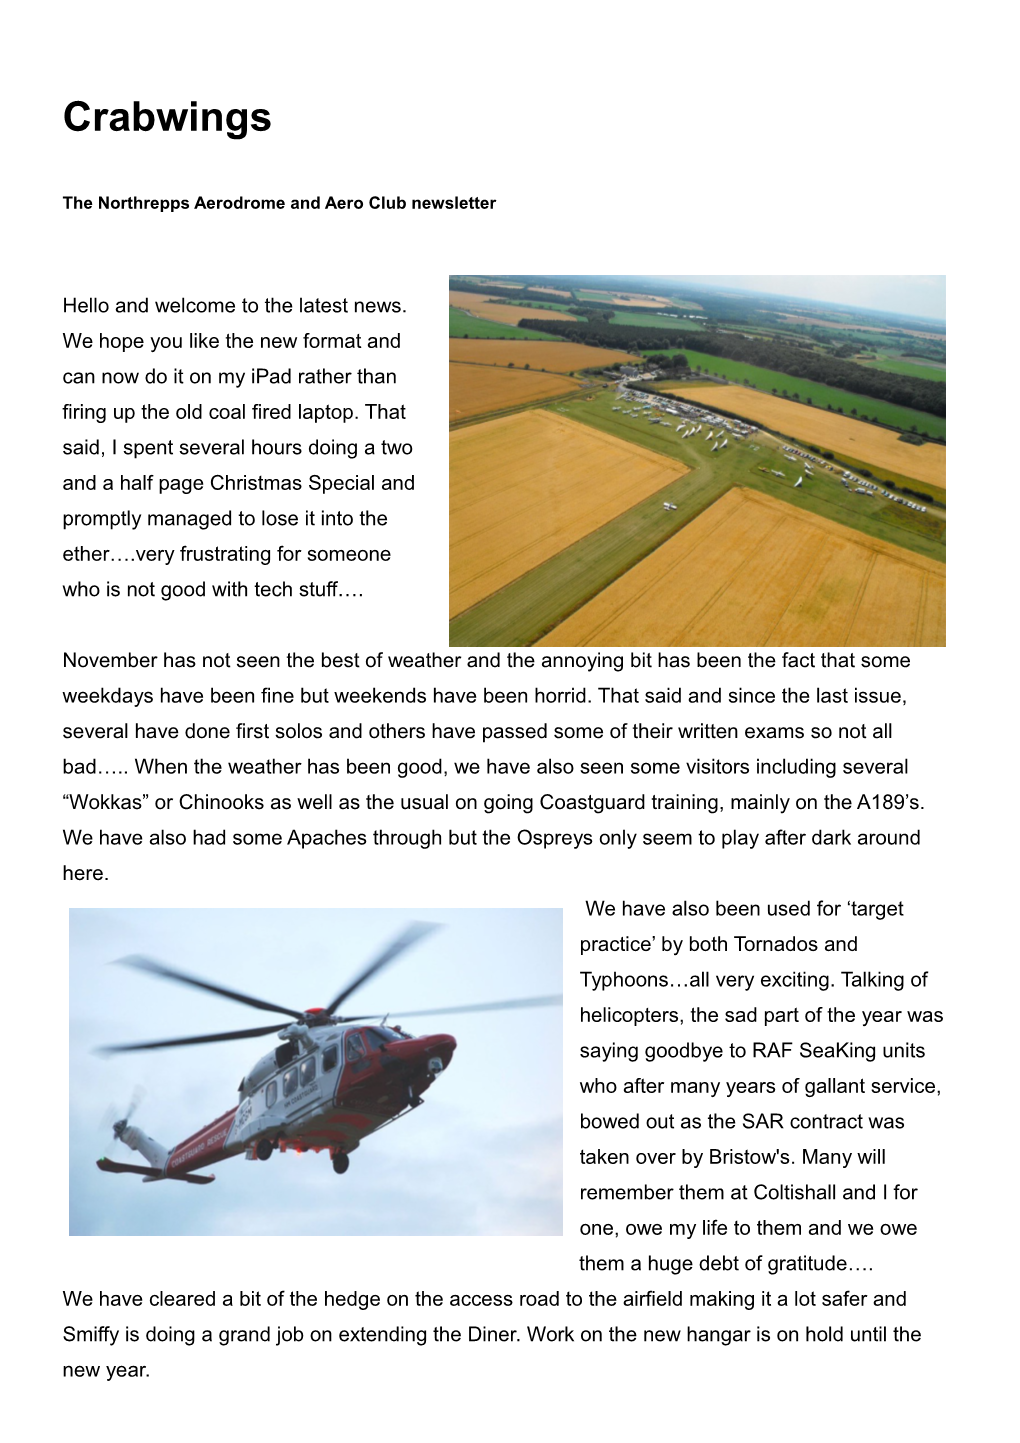 The Northrepps Aerodrome and Aero Club Newsletter